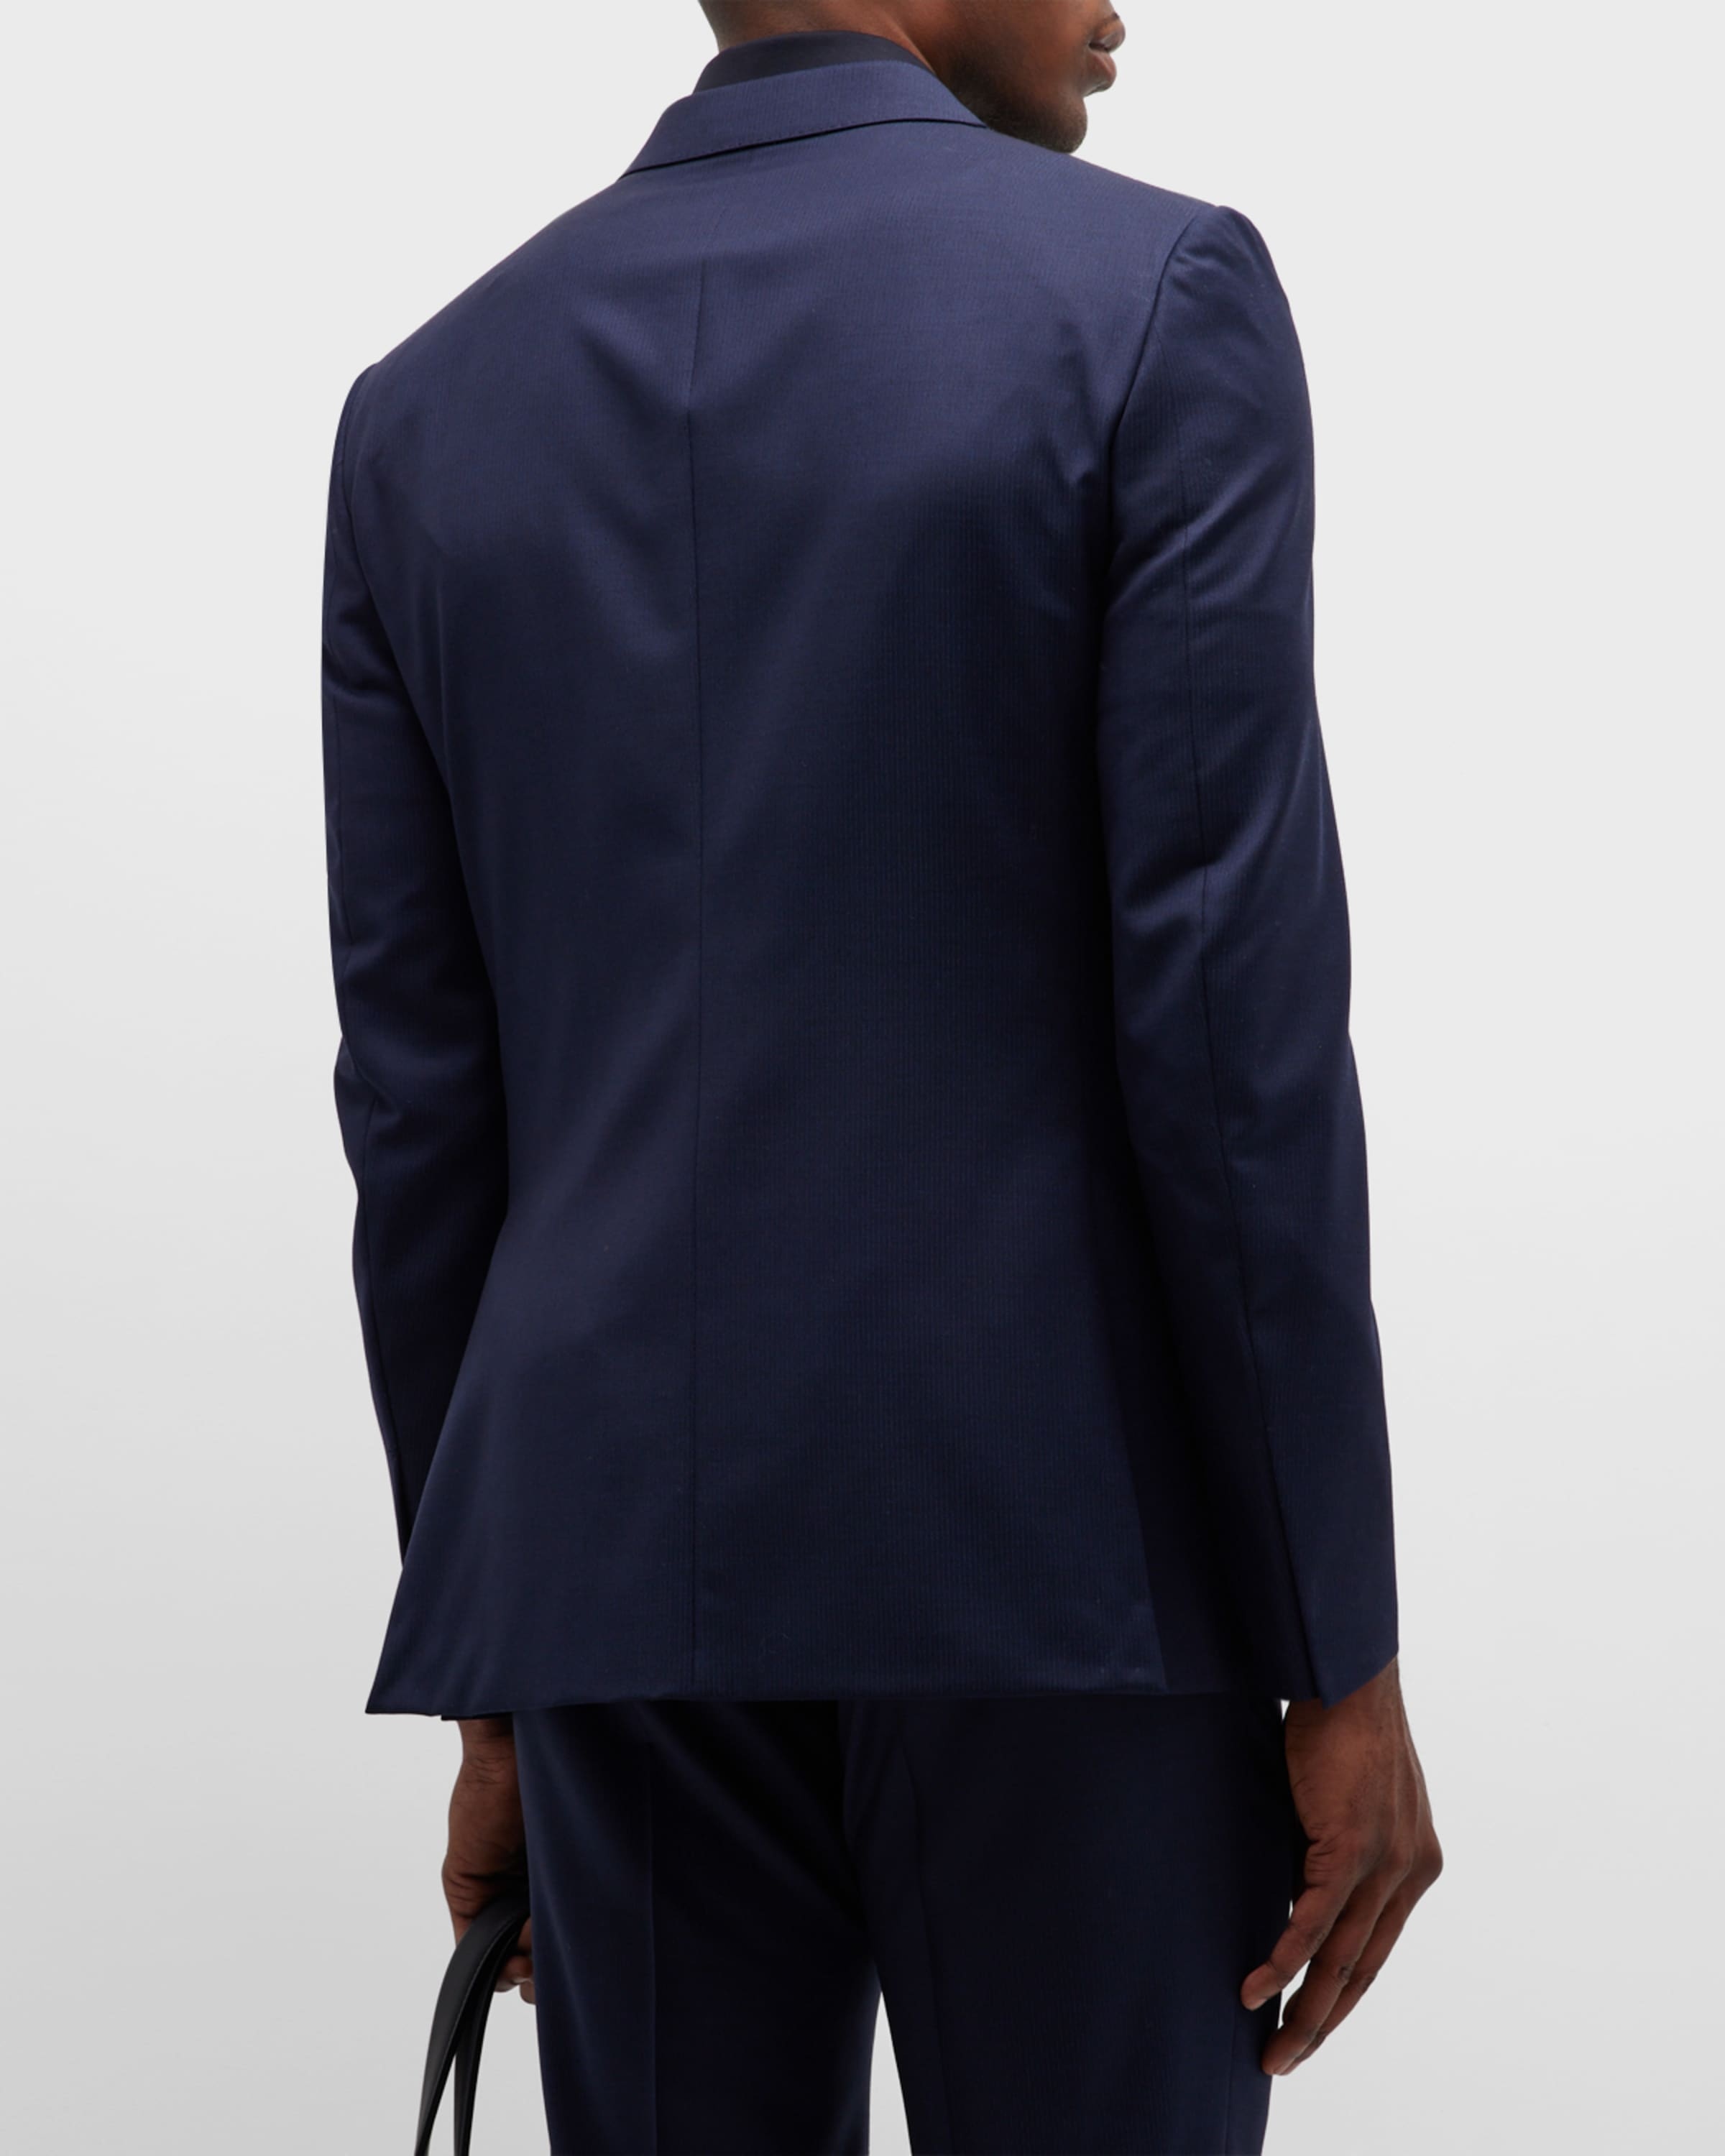 Men's Narrow Tonal Stripe Wool Suit - 6